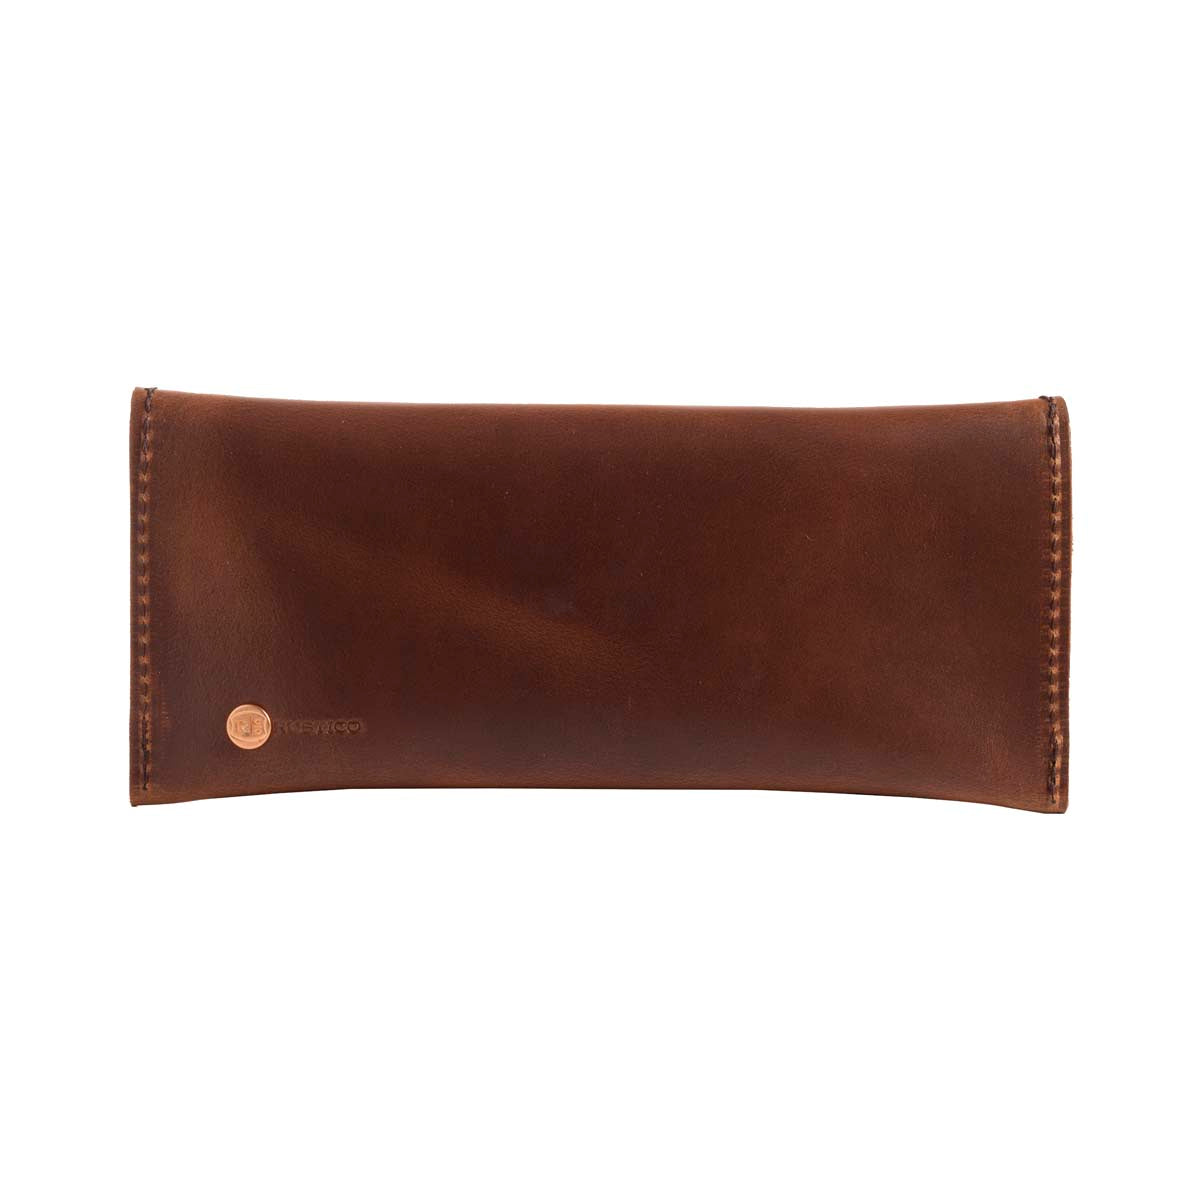 Rustico Leather Cash Envelope Wallet